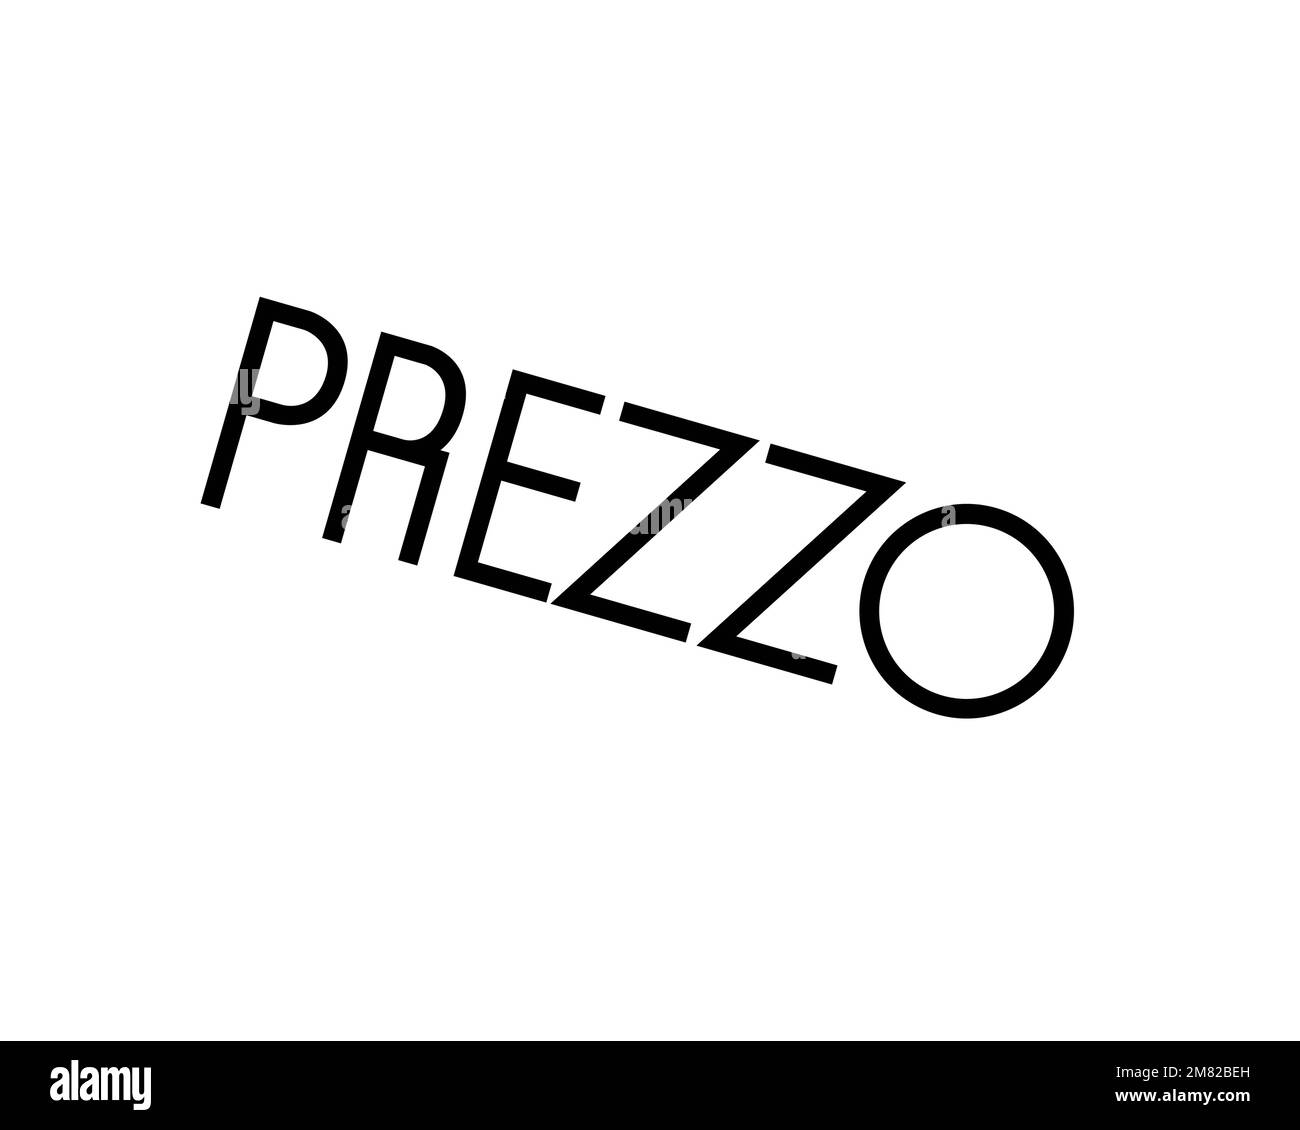 Prezzo Holdings, rotated logo, white background B Stock Photo